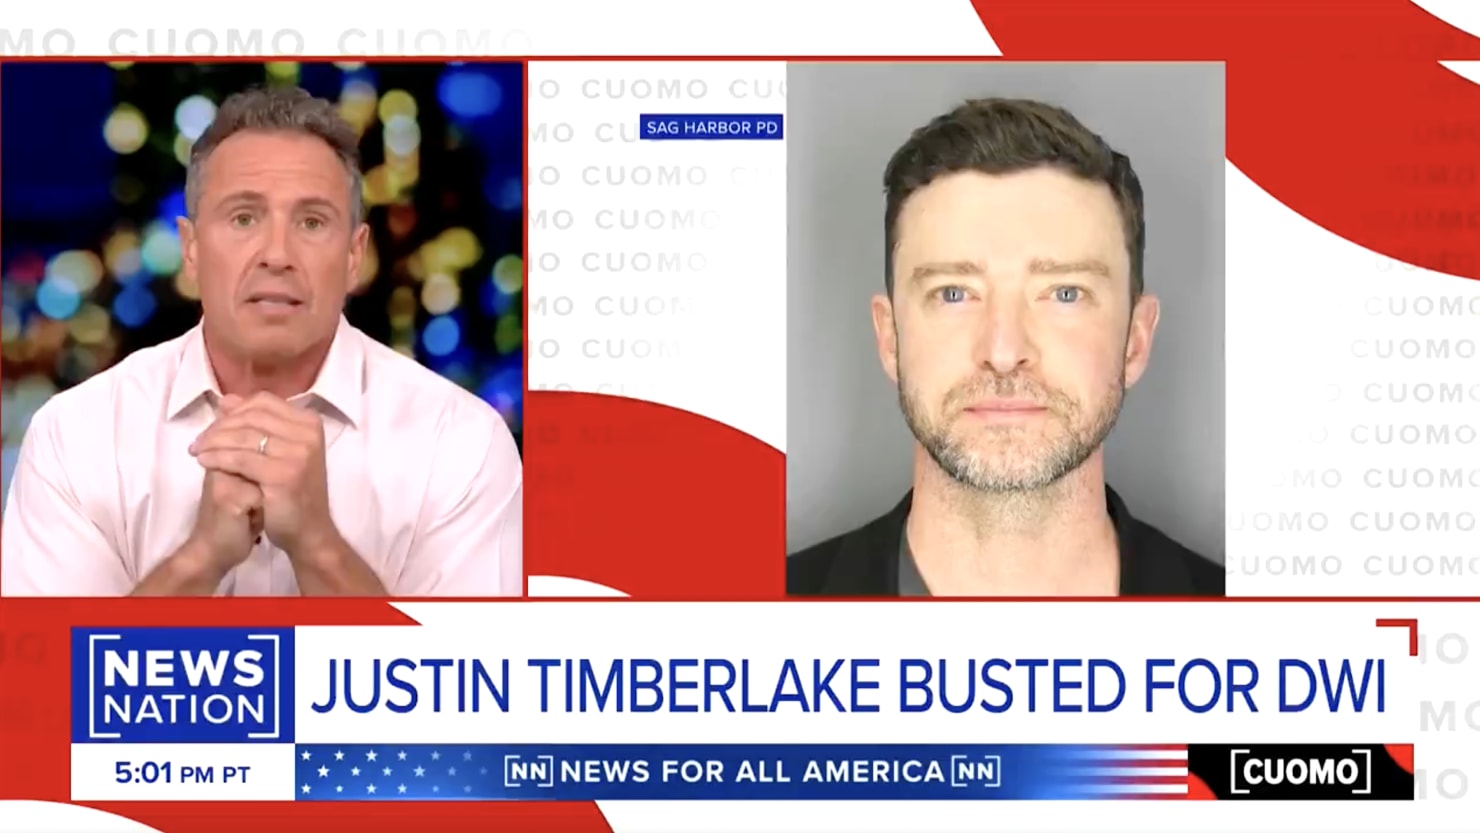 Chris Cuomo defends Justin Timberlake from “gotcha” media